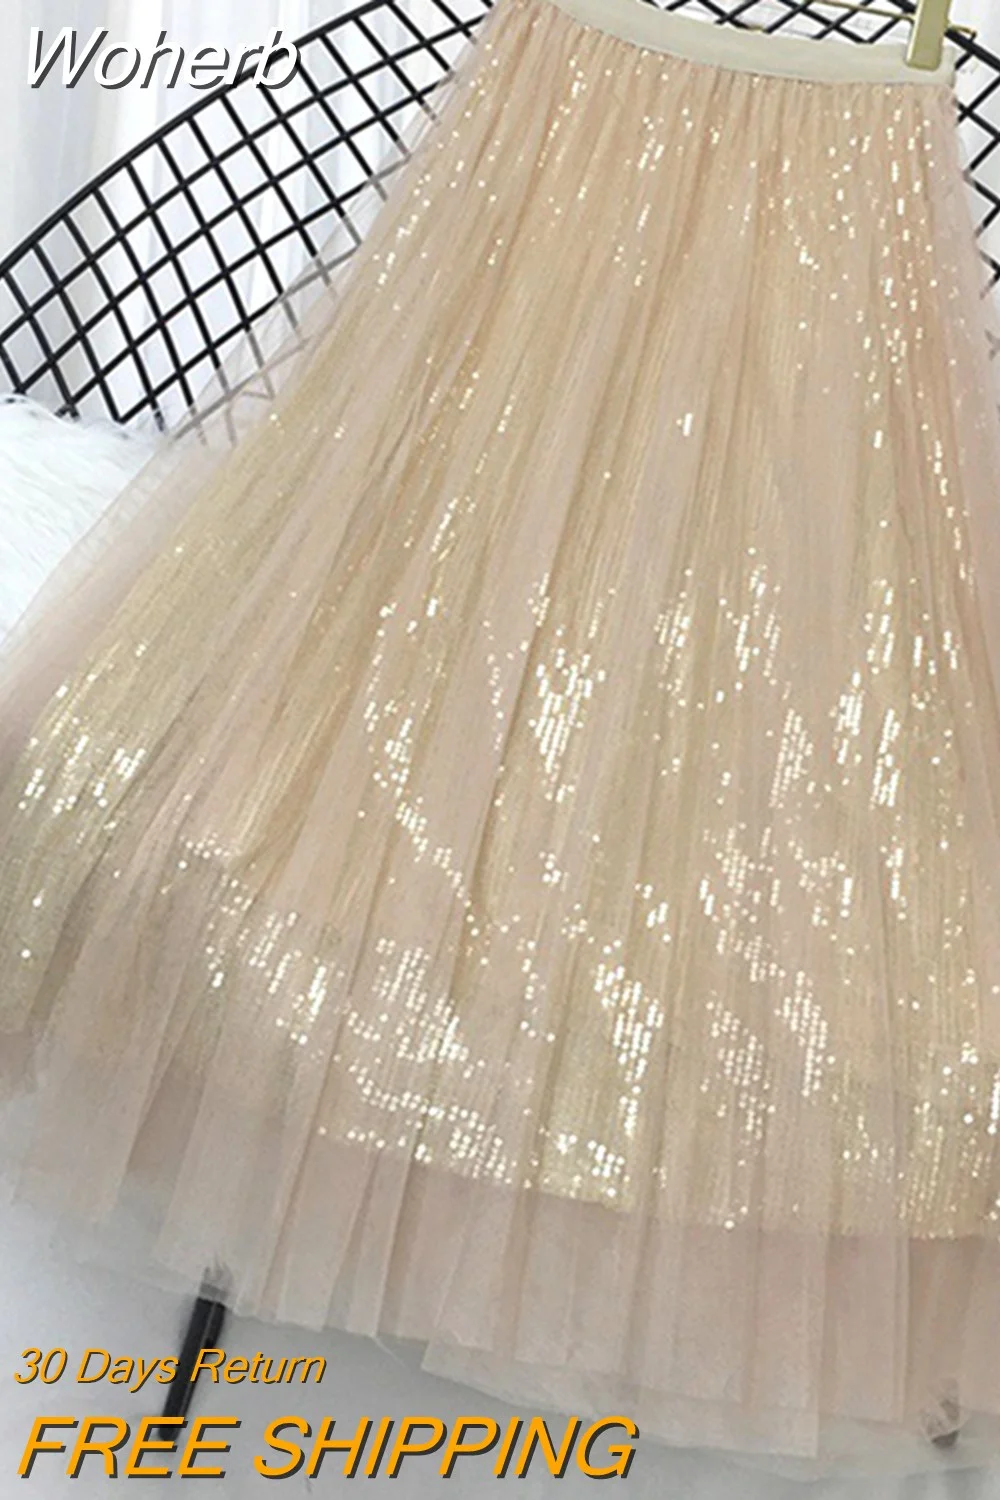 Woherb Women Korean Style Sequin Tulle A-line Skirt Vintage Elastic Waist Party Midi Mesh Skirt QT2199